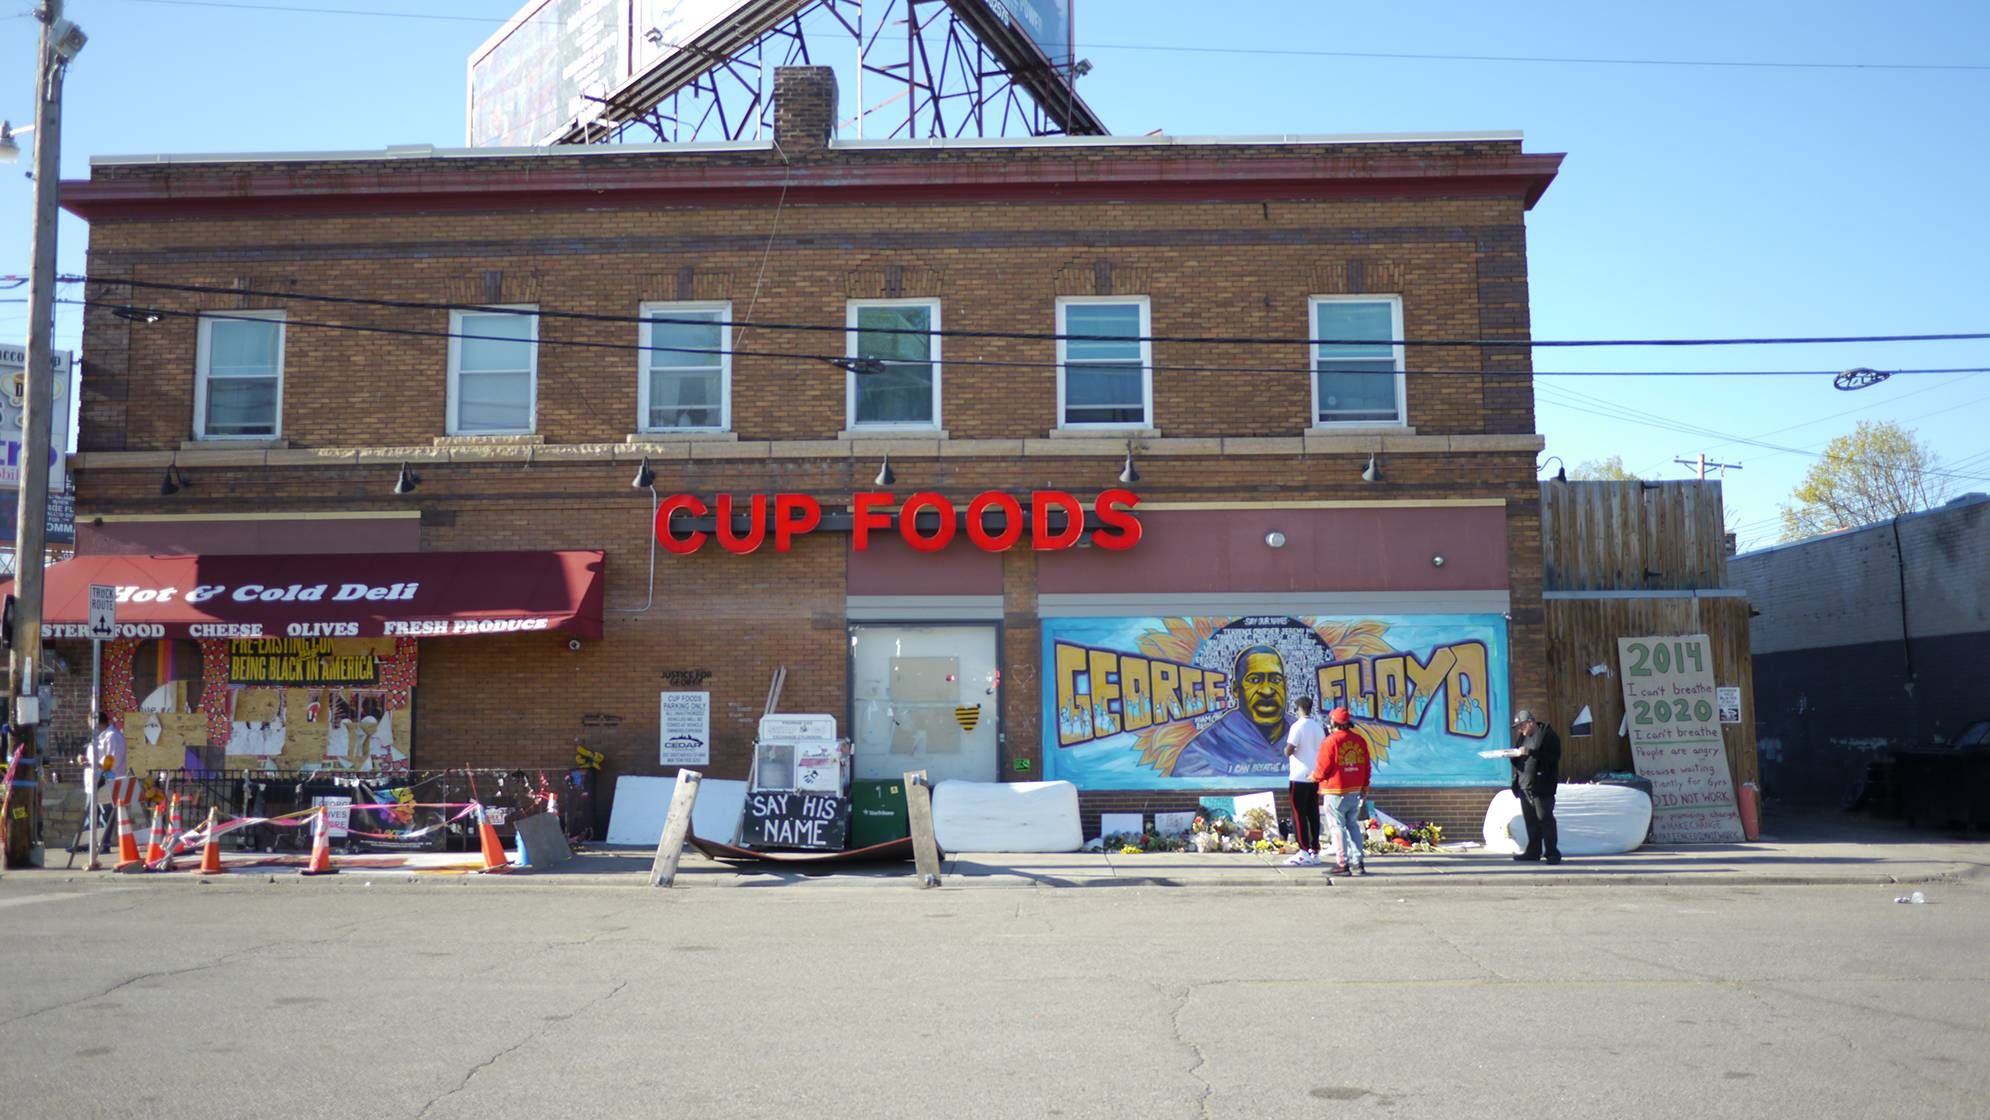 The exterior of Cup Foods displaying the George Floyd mural in situ.